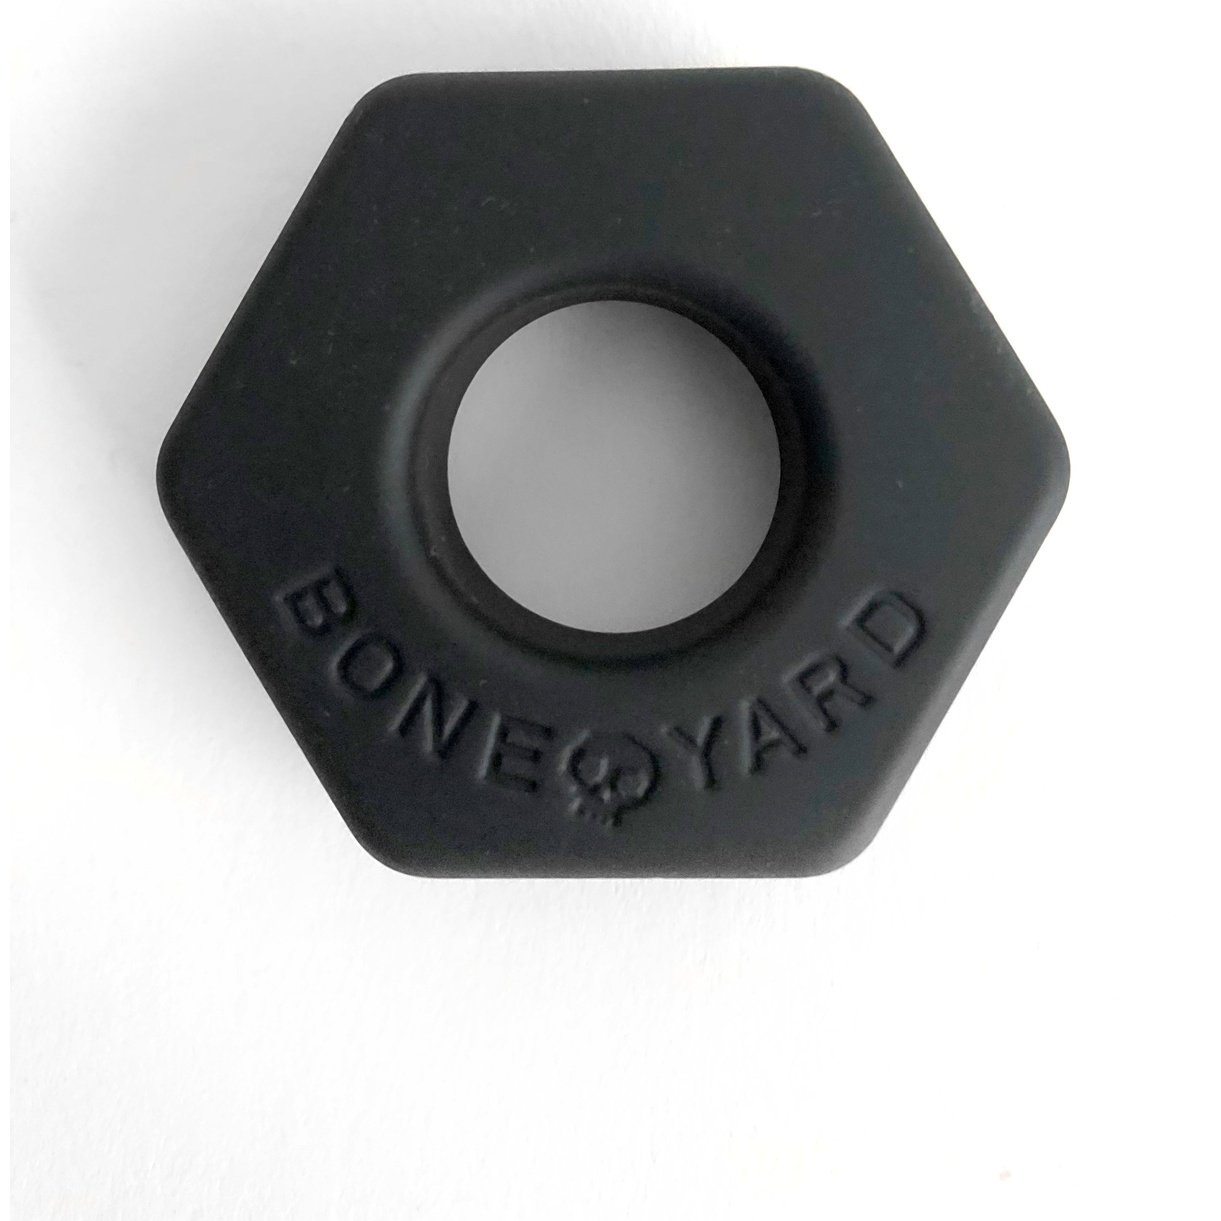 Boneyard - Bust a Nut Black